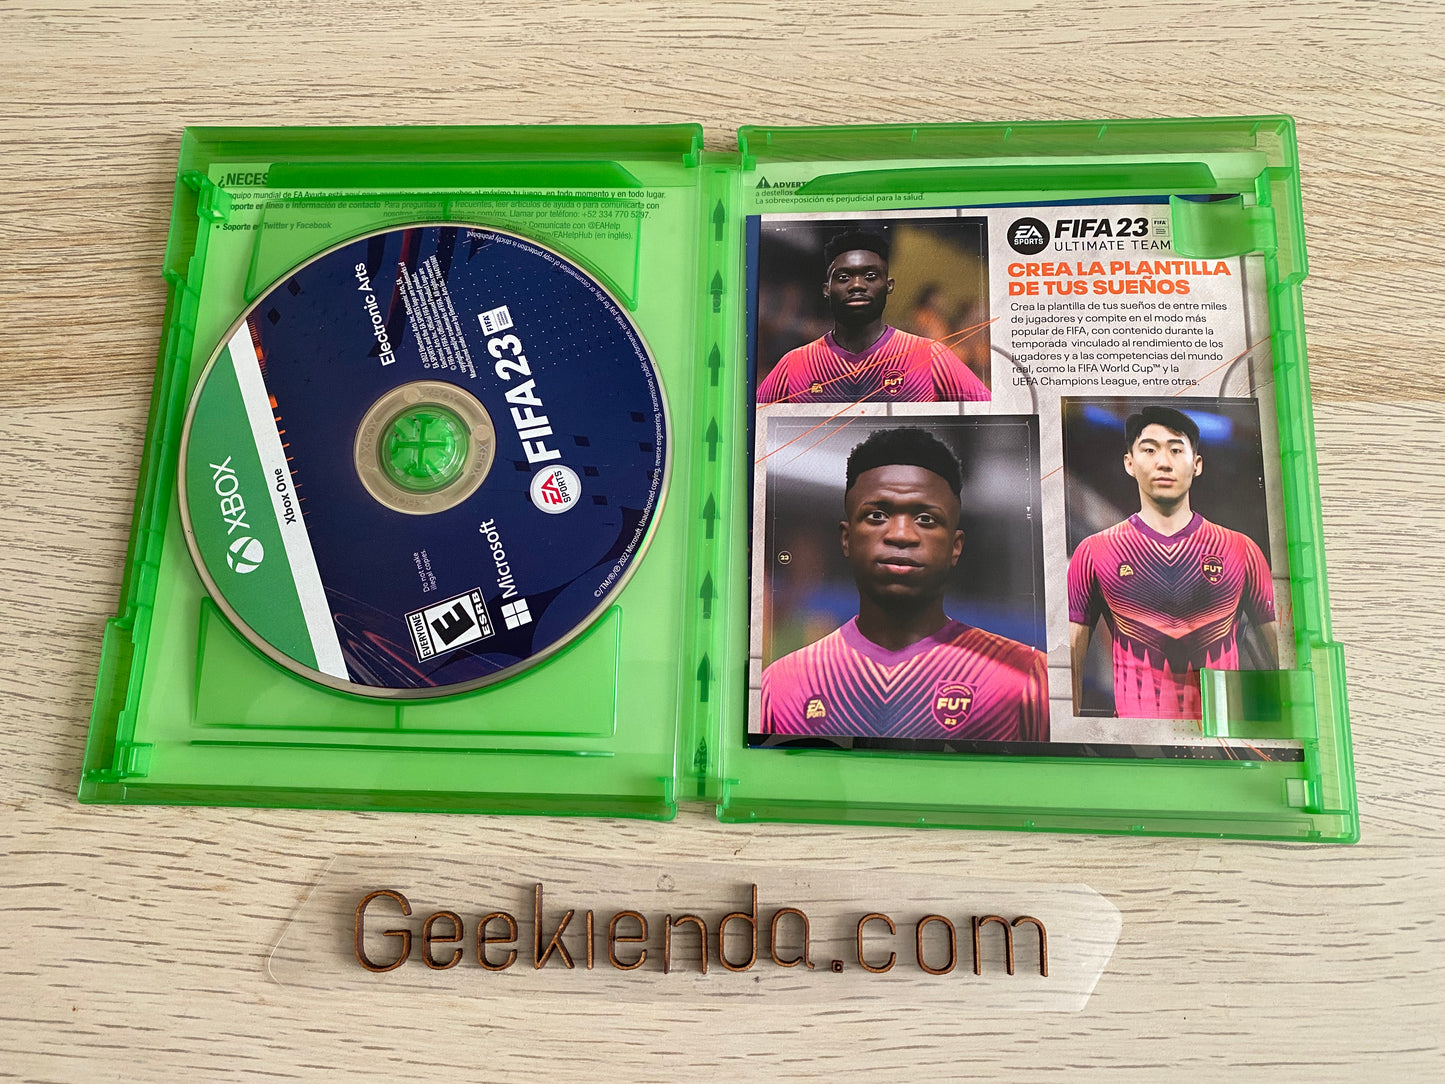 .Geekienda - Videojuegos juego ea sports fifa 23  - Microsoft Xbox one / compatible con series s / x